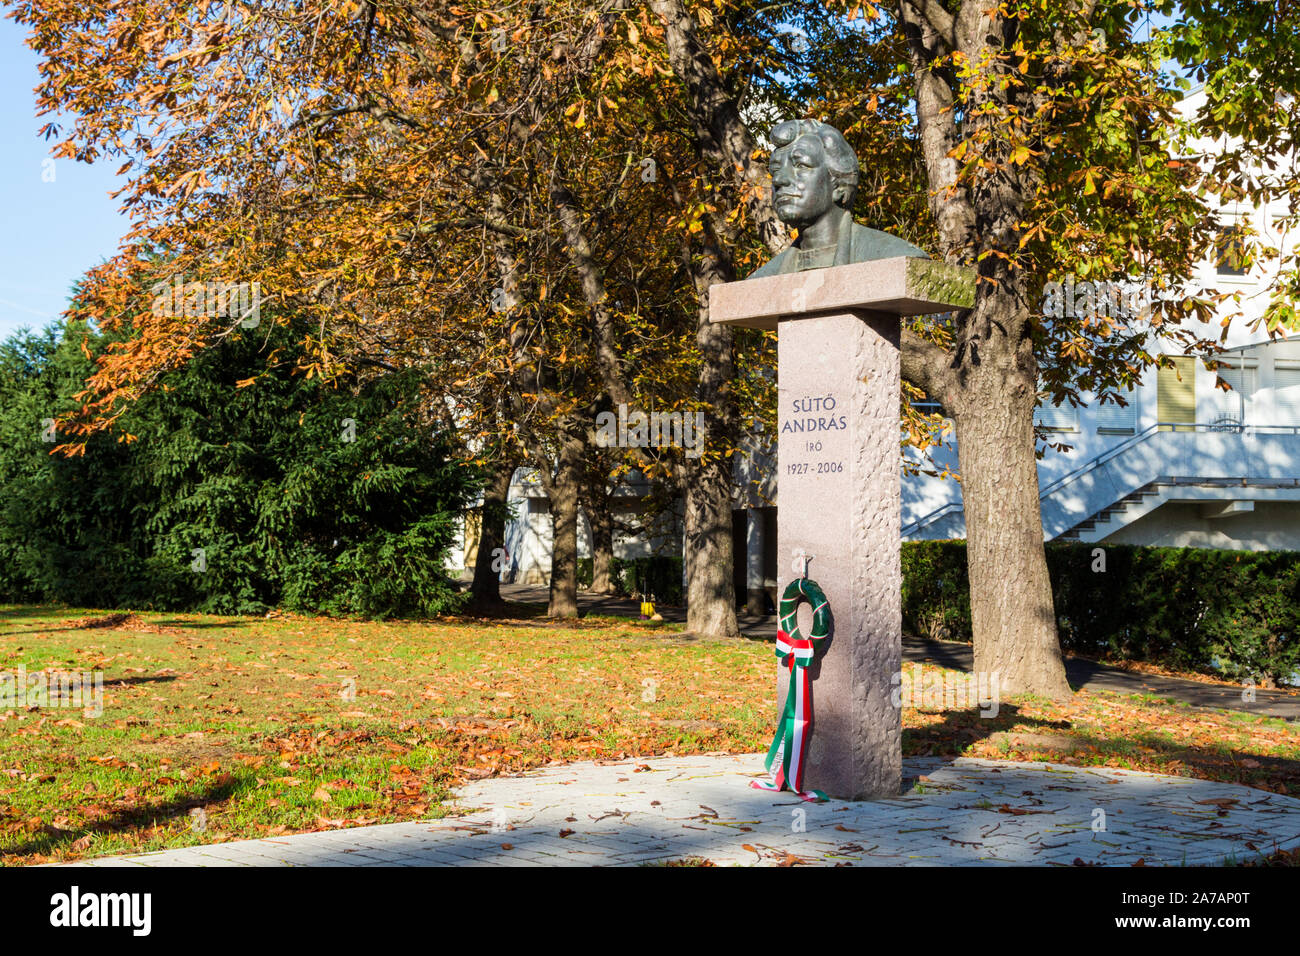 Bust statue of Andras Suto Hungarian writer, Sopron, Hungary Stock Photo